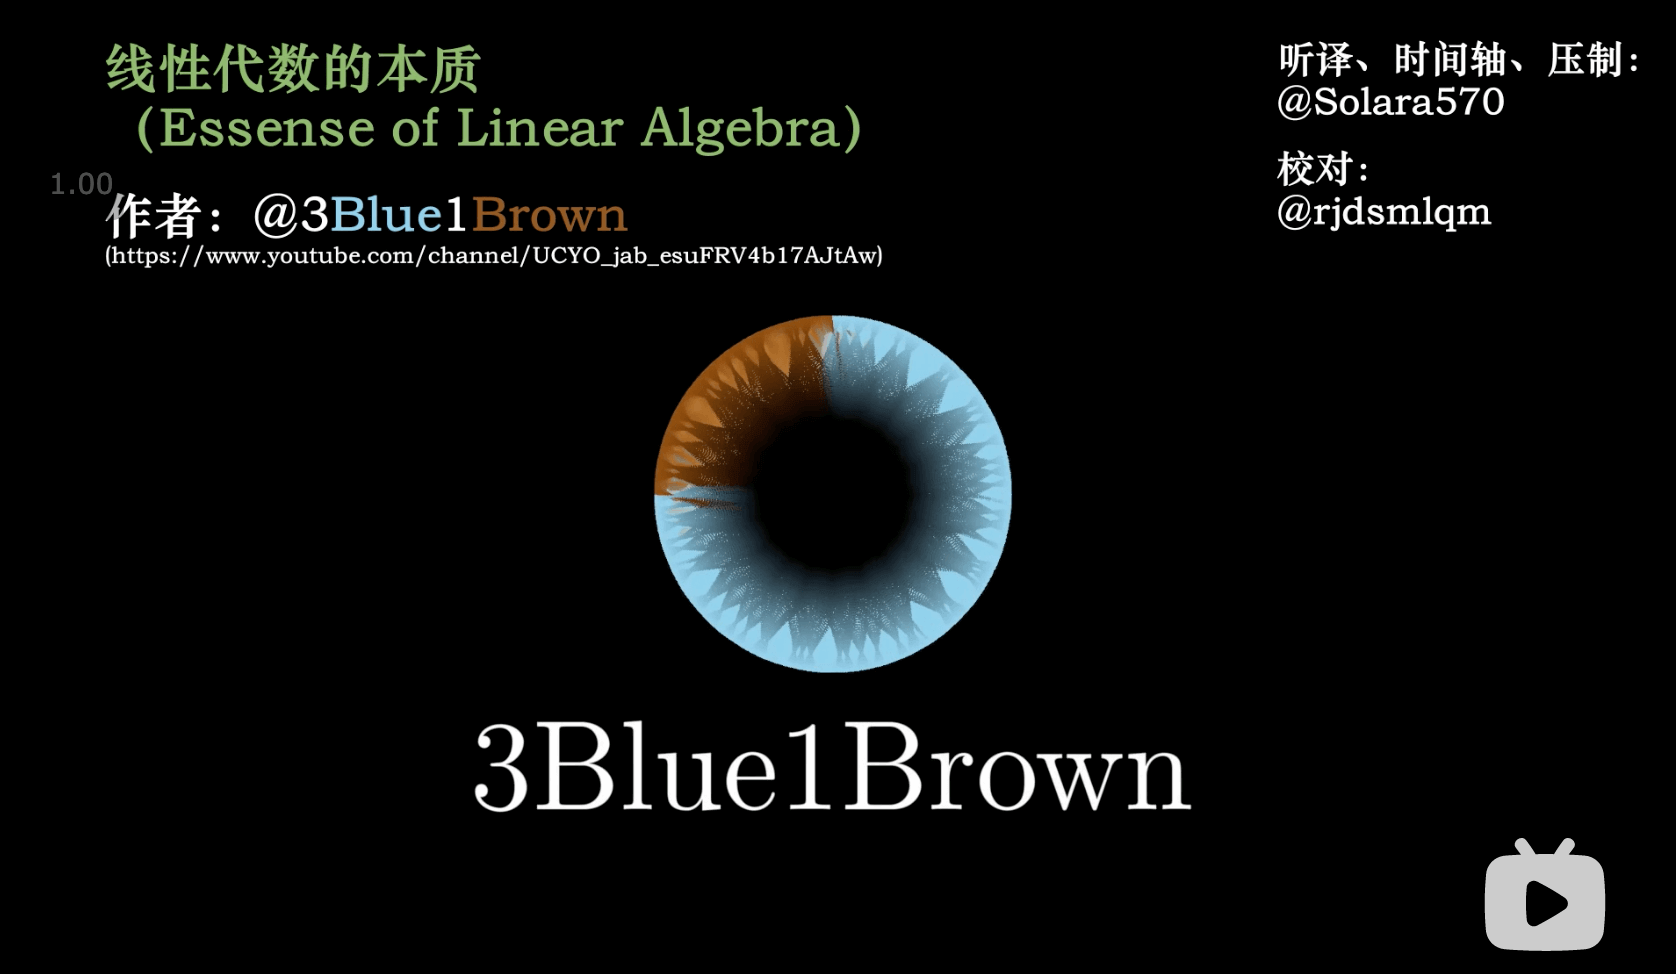 3Blue1Brown——线性代数的本质